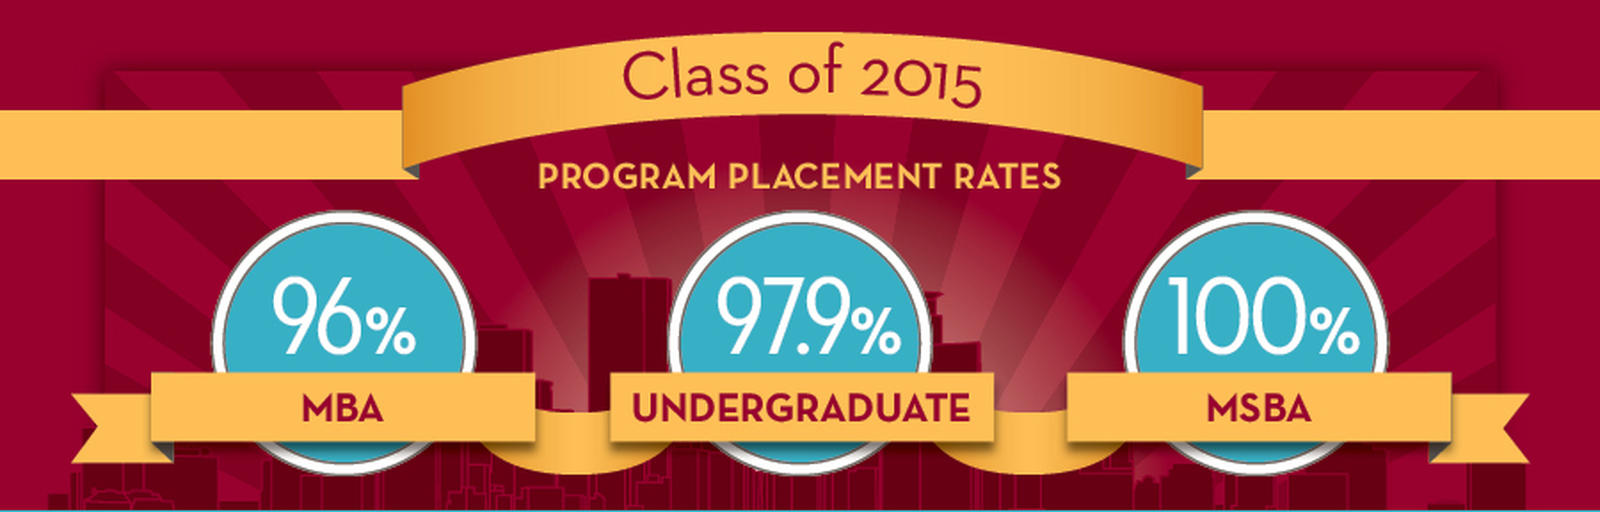 Class of 2015 Program Placement Rates: 96% MBA, 97.9% Undergraduate, & 100% MSBA